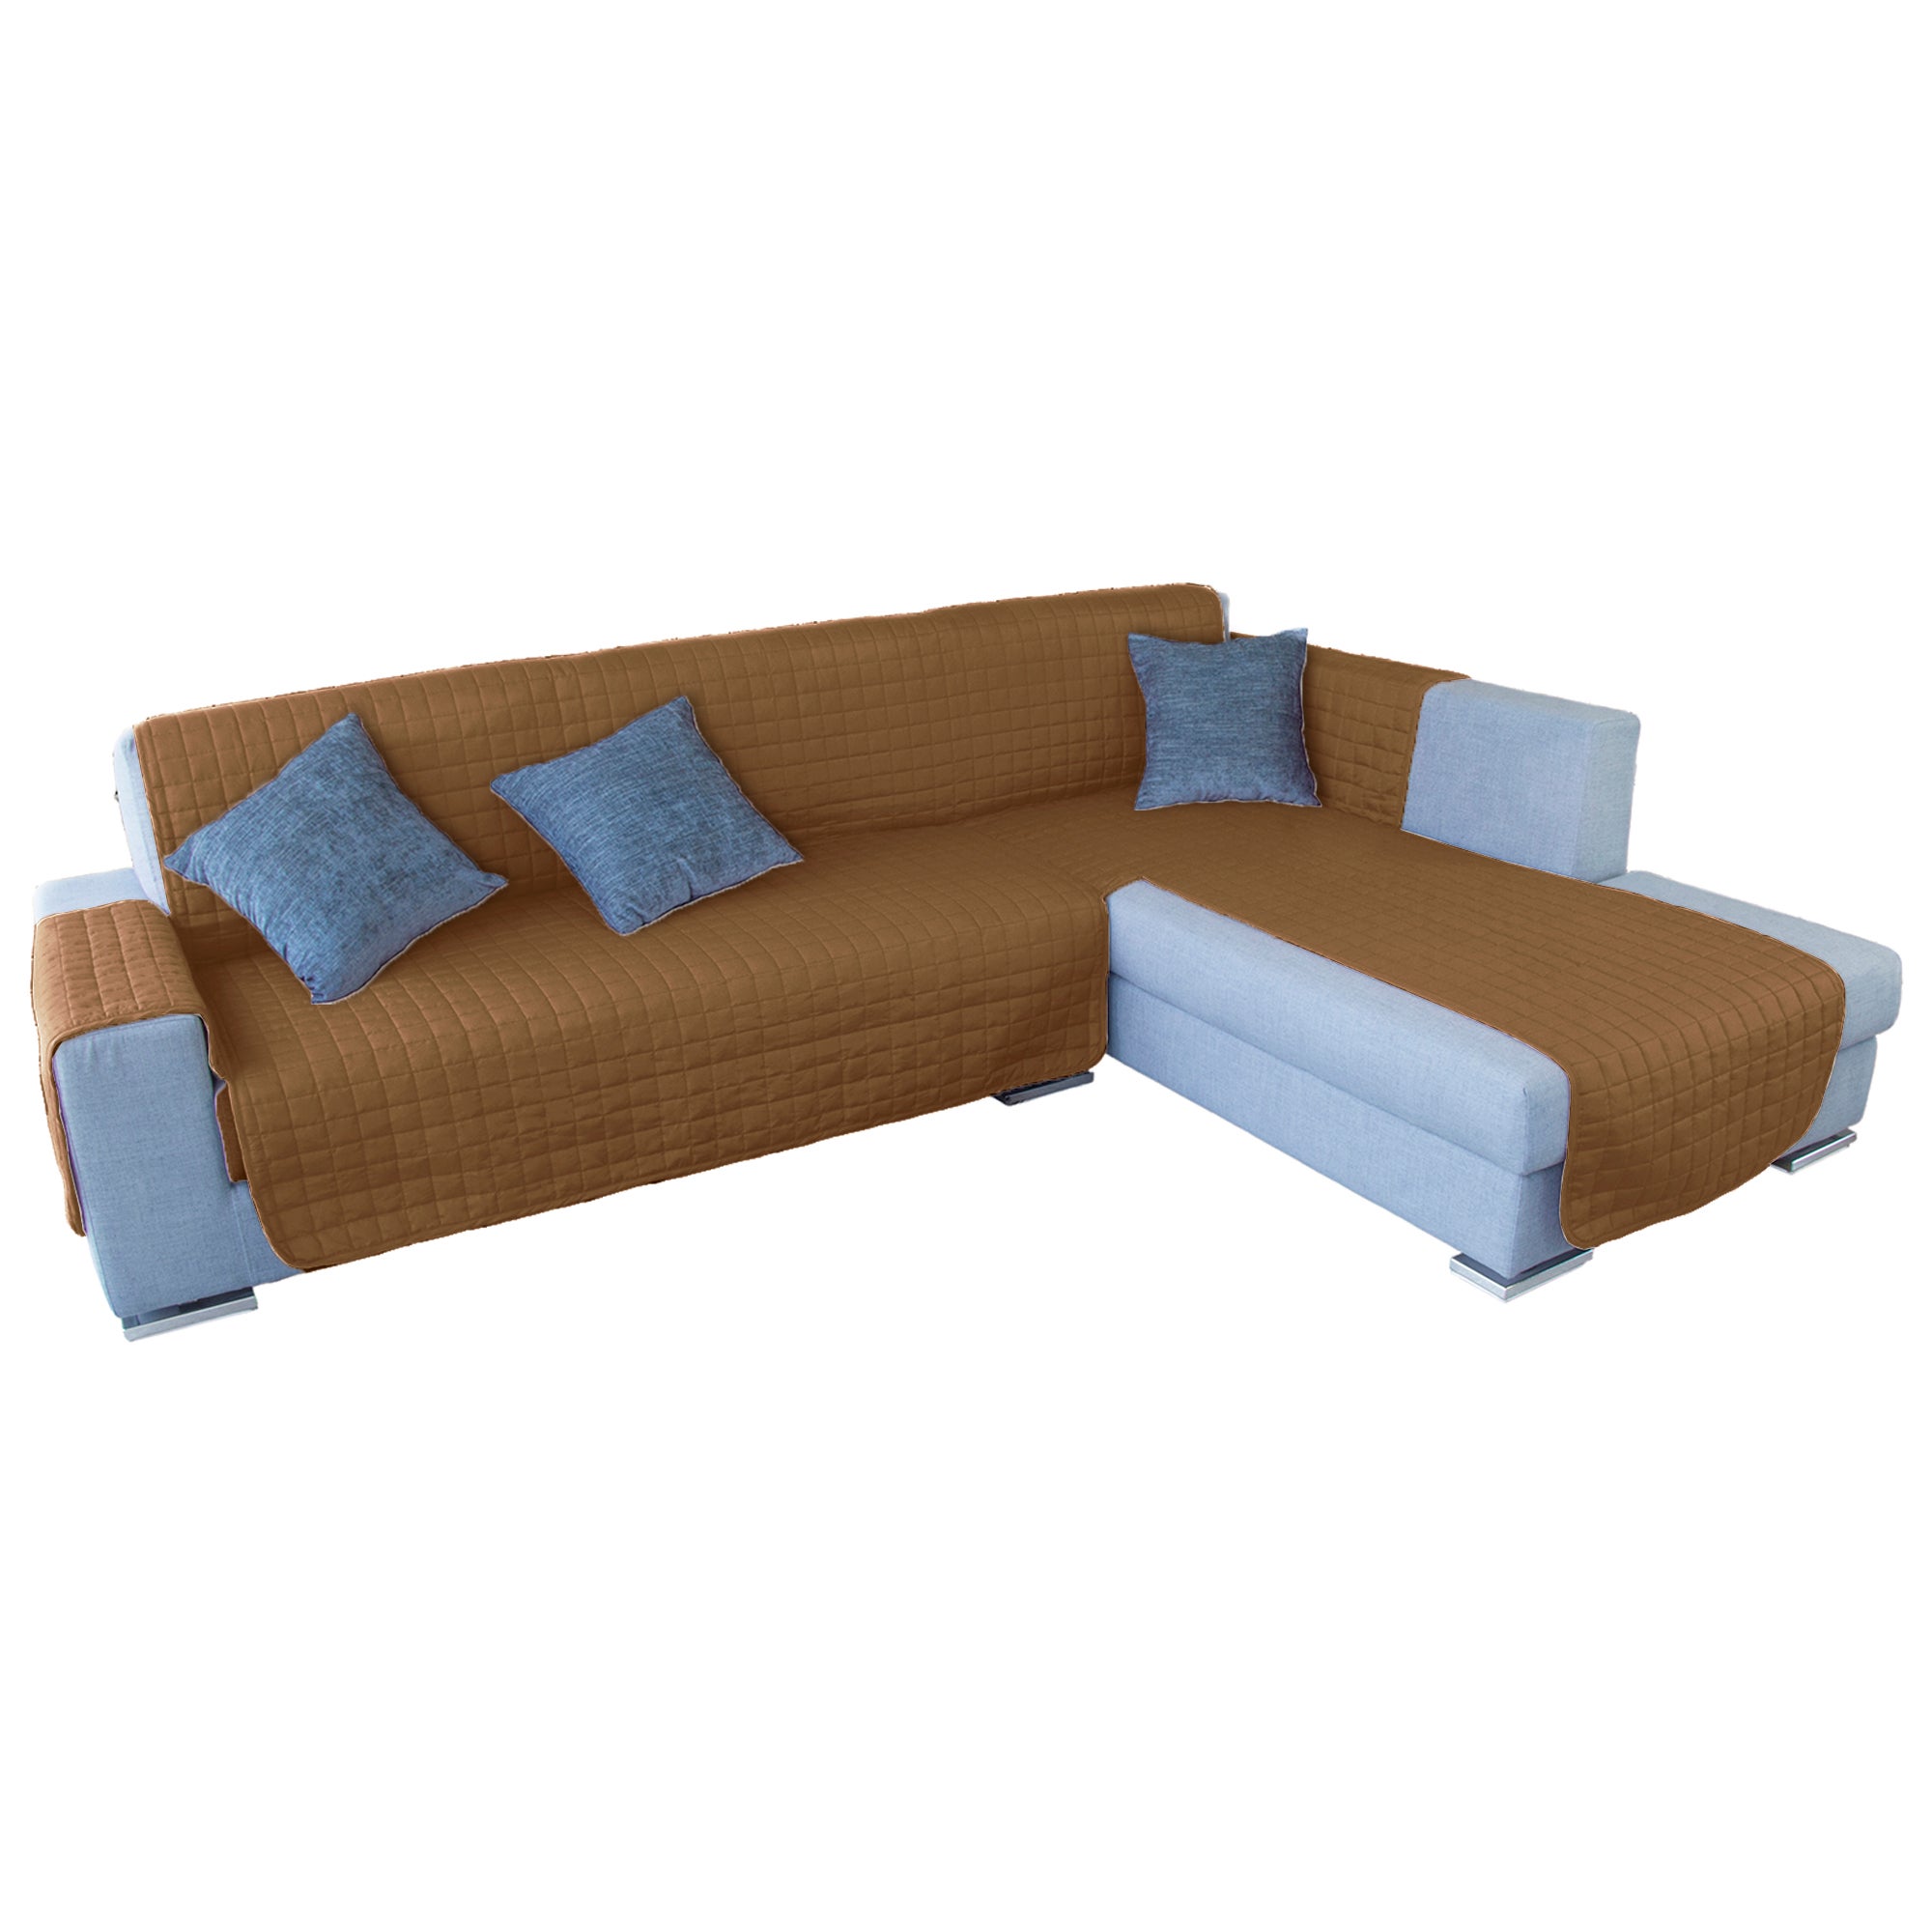 FUNDA PRACTICA PARA sofa tela reversible acolchada 1,2,3,4 plazas Dual  Quilt EUR 44,95 - PicClick FR